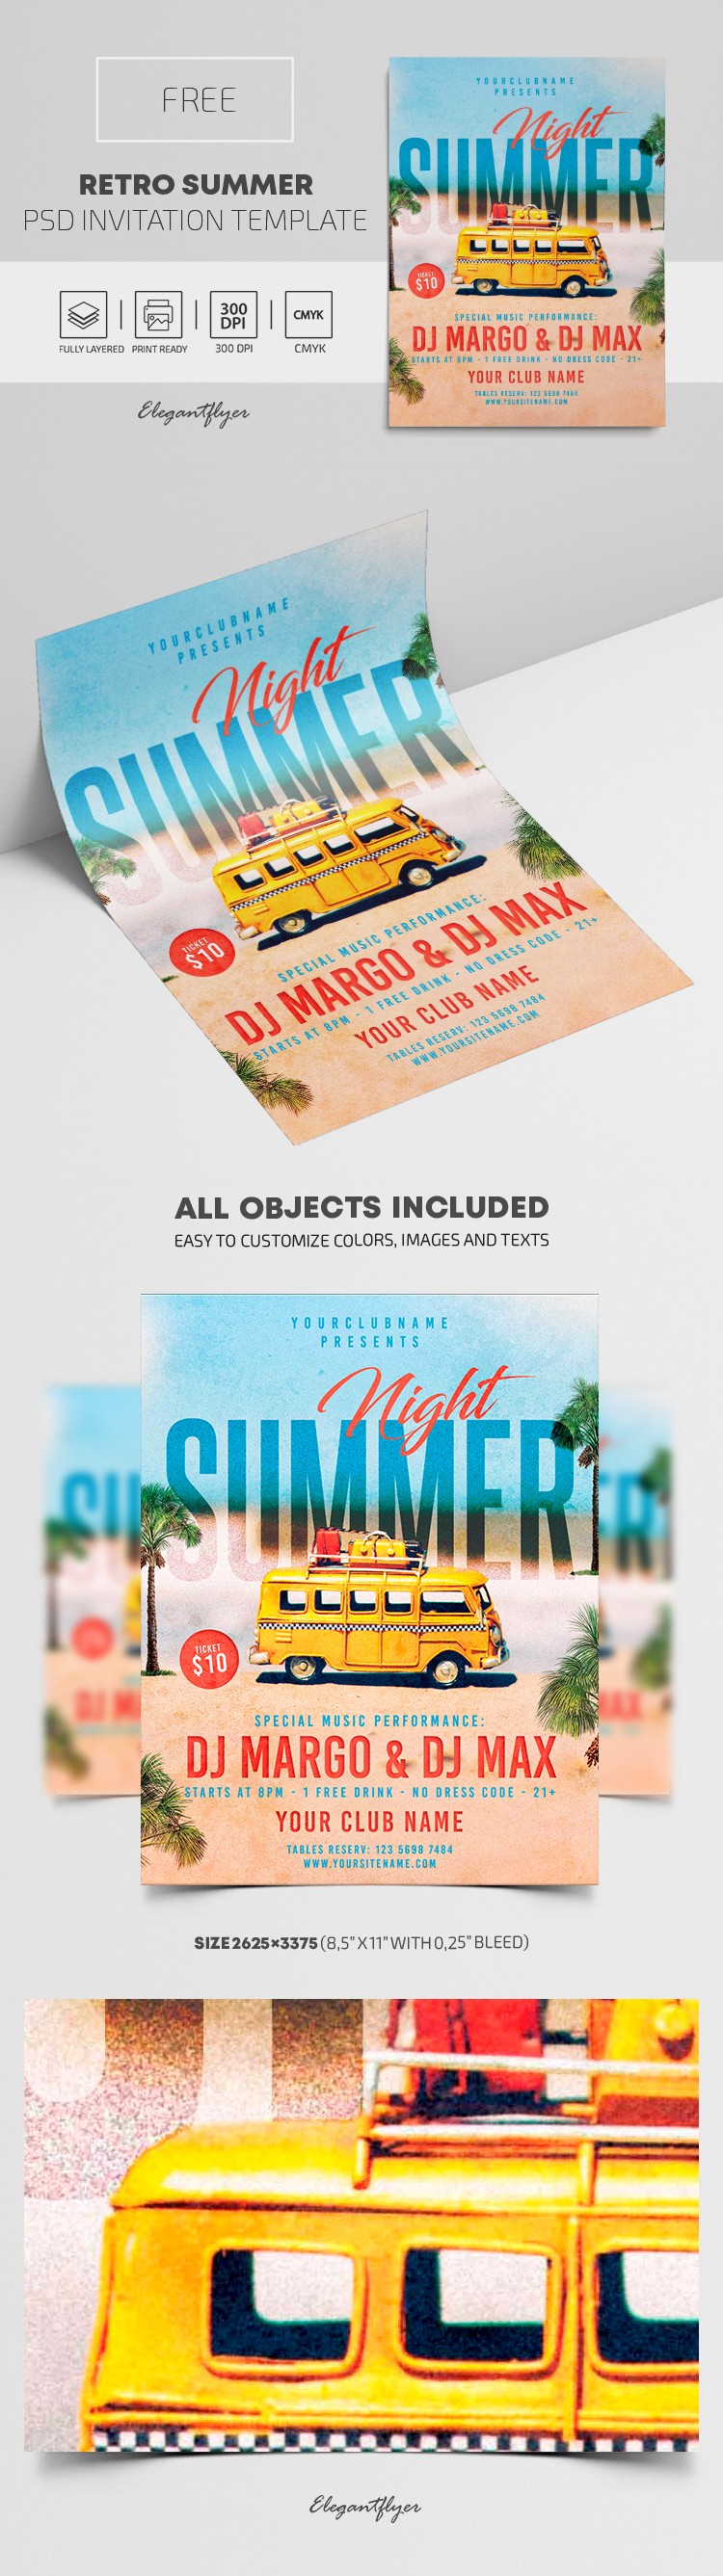 Retro Summer Invitation by ElegantFlyer